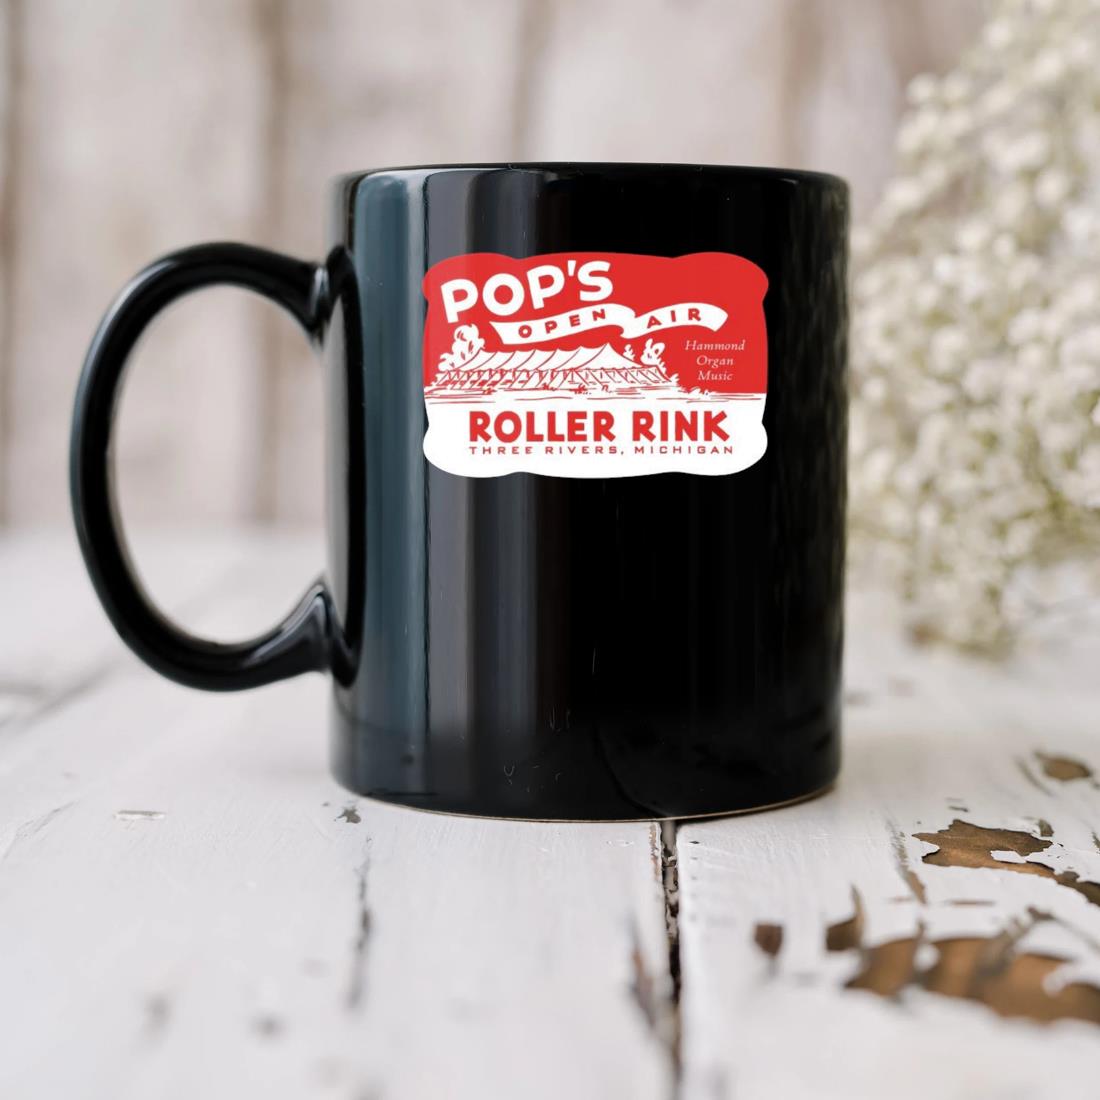 Pop's Three Rivers Mi Vintage Roller Rink Mug